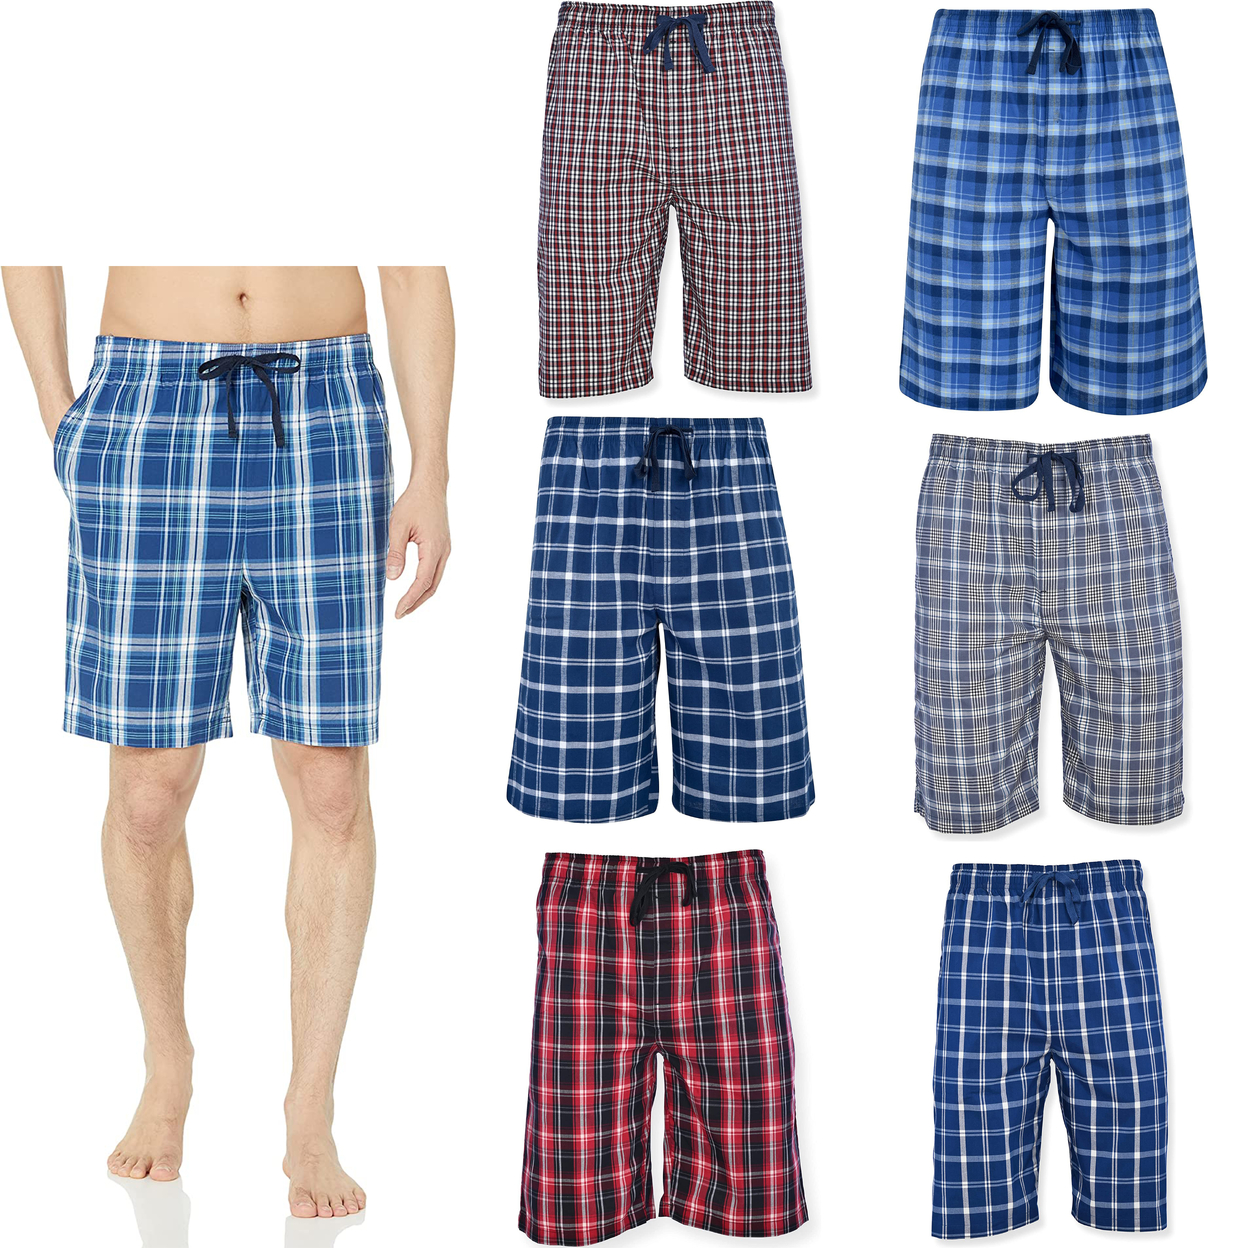 2-Pack: Men's Ultra Soft Plaid Lounge Pajama Sleep Wear Shorts - Black & Blue, Medium